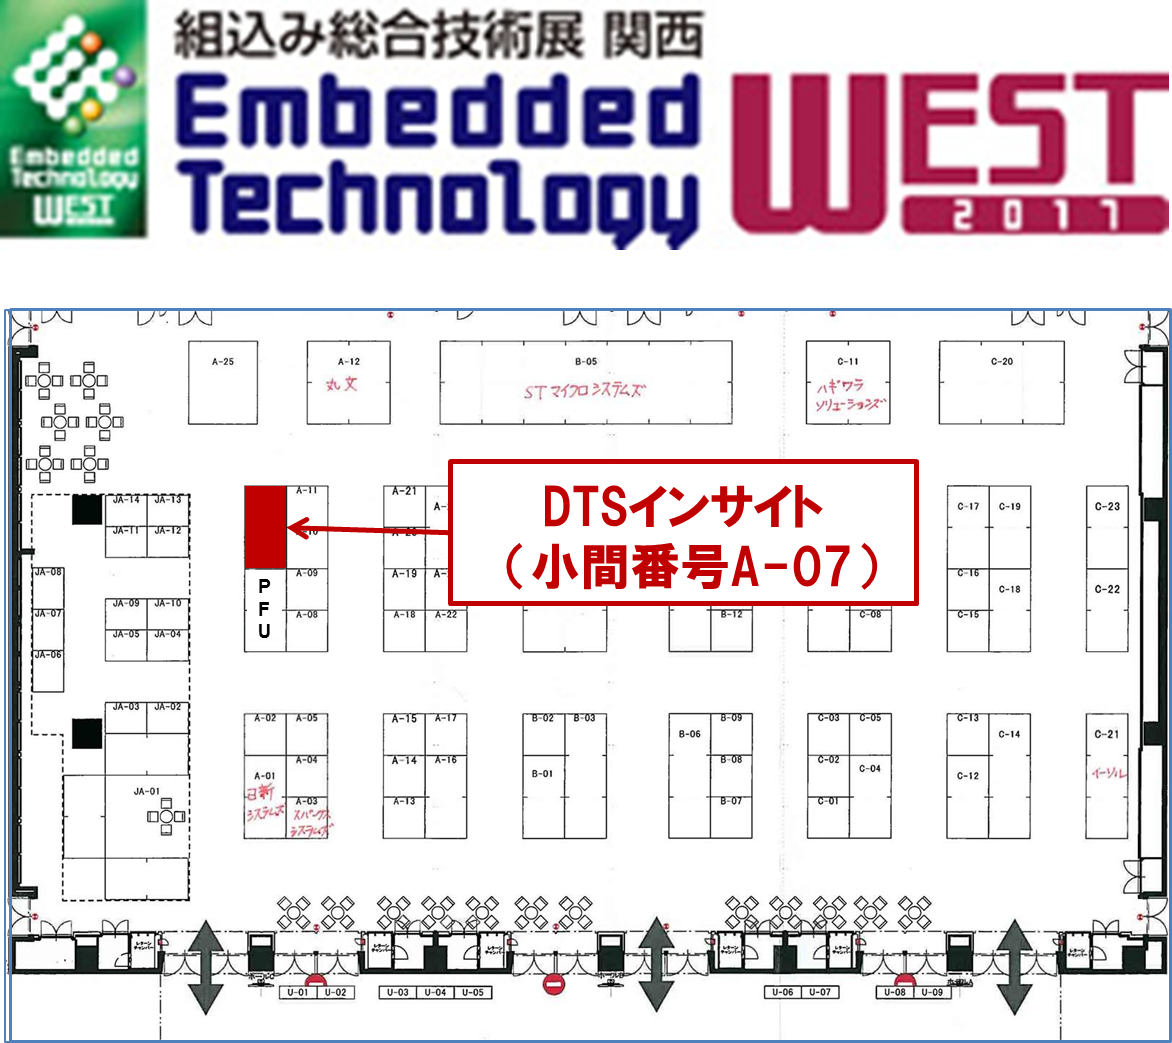 Embedded Technology West 2017／組込み総合技術展 関西